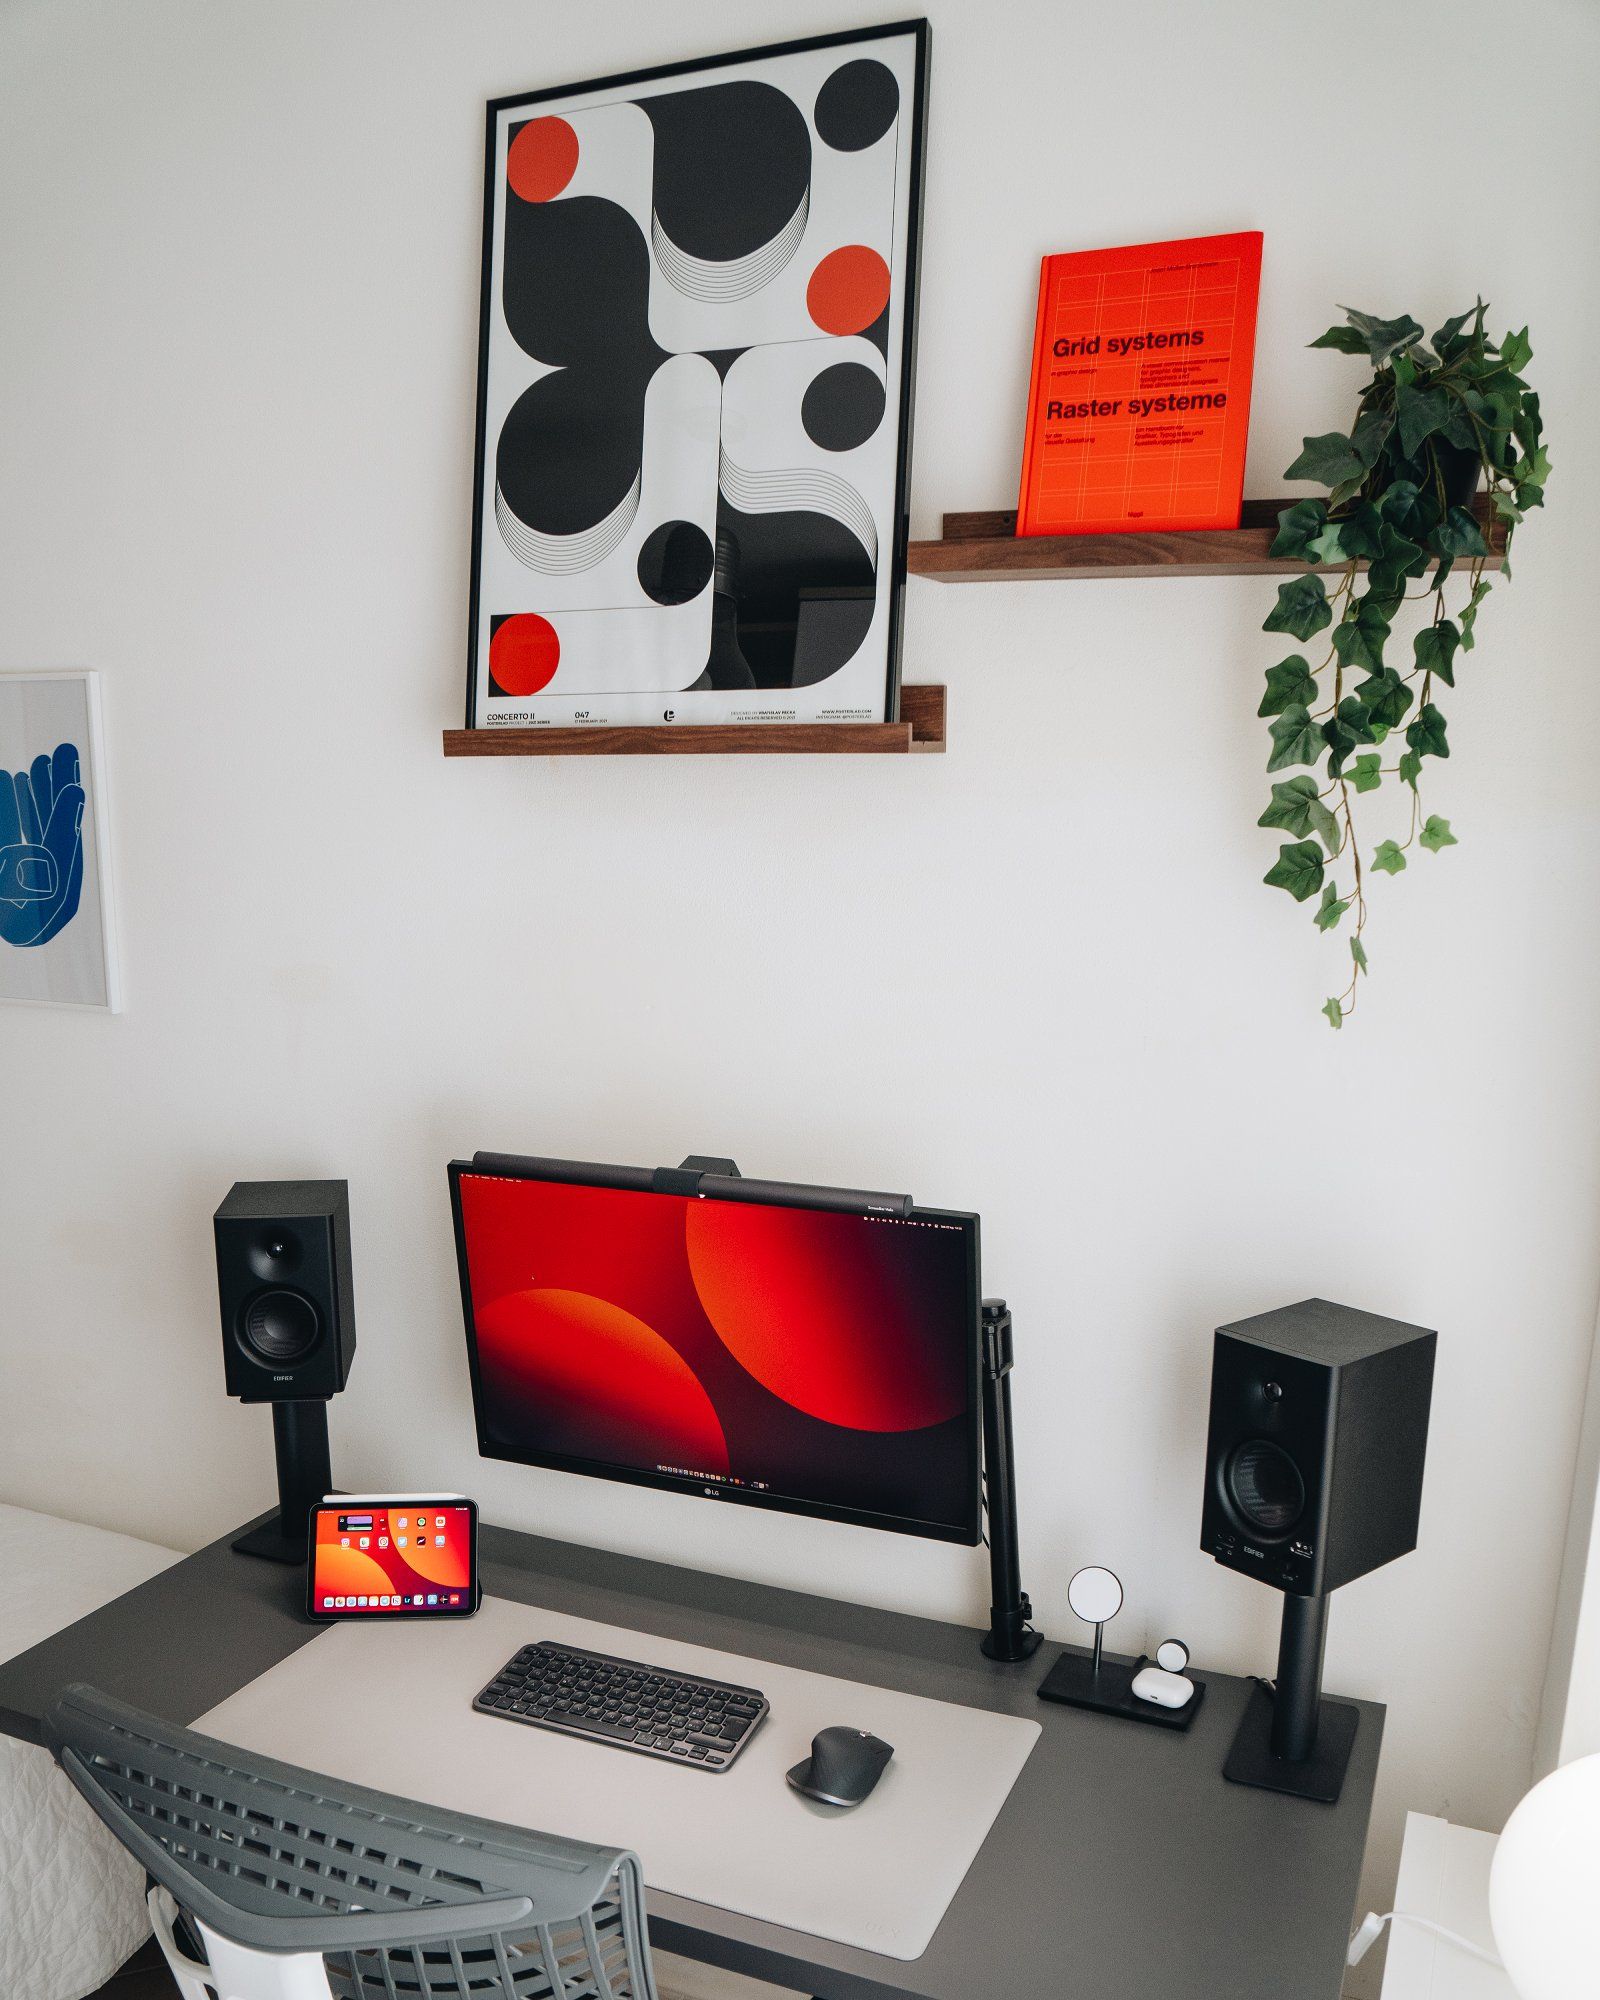 A minimal desk setup with a Concerto II poster by Posterlad on a floating shelf